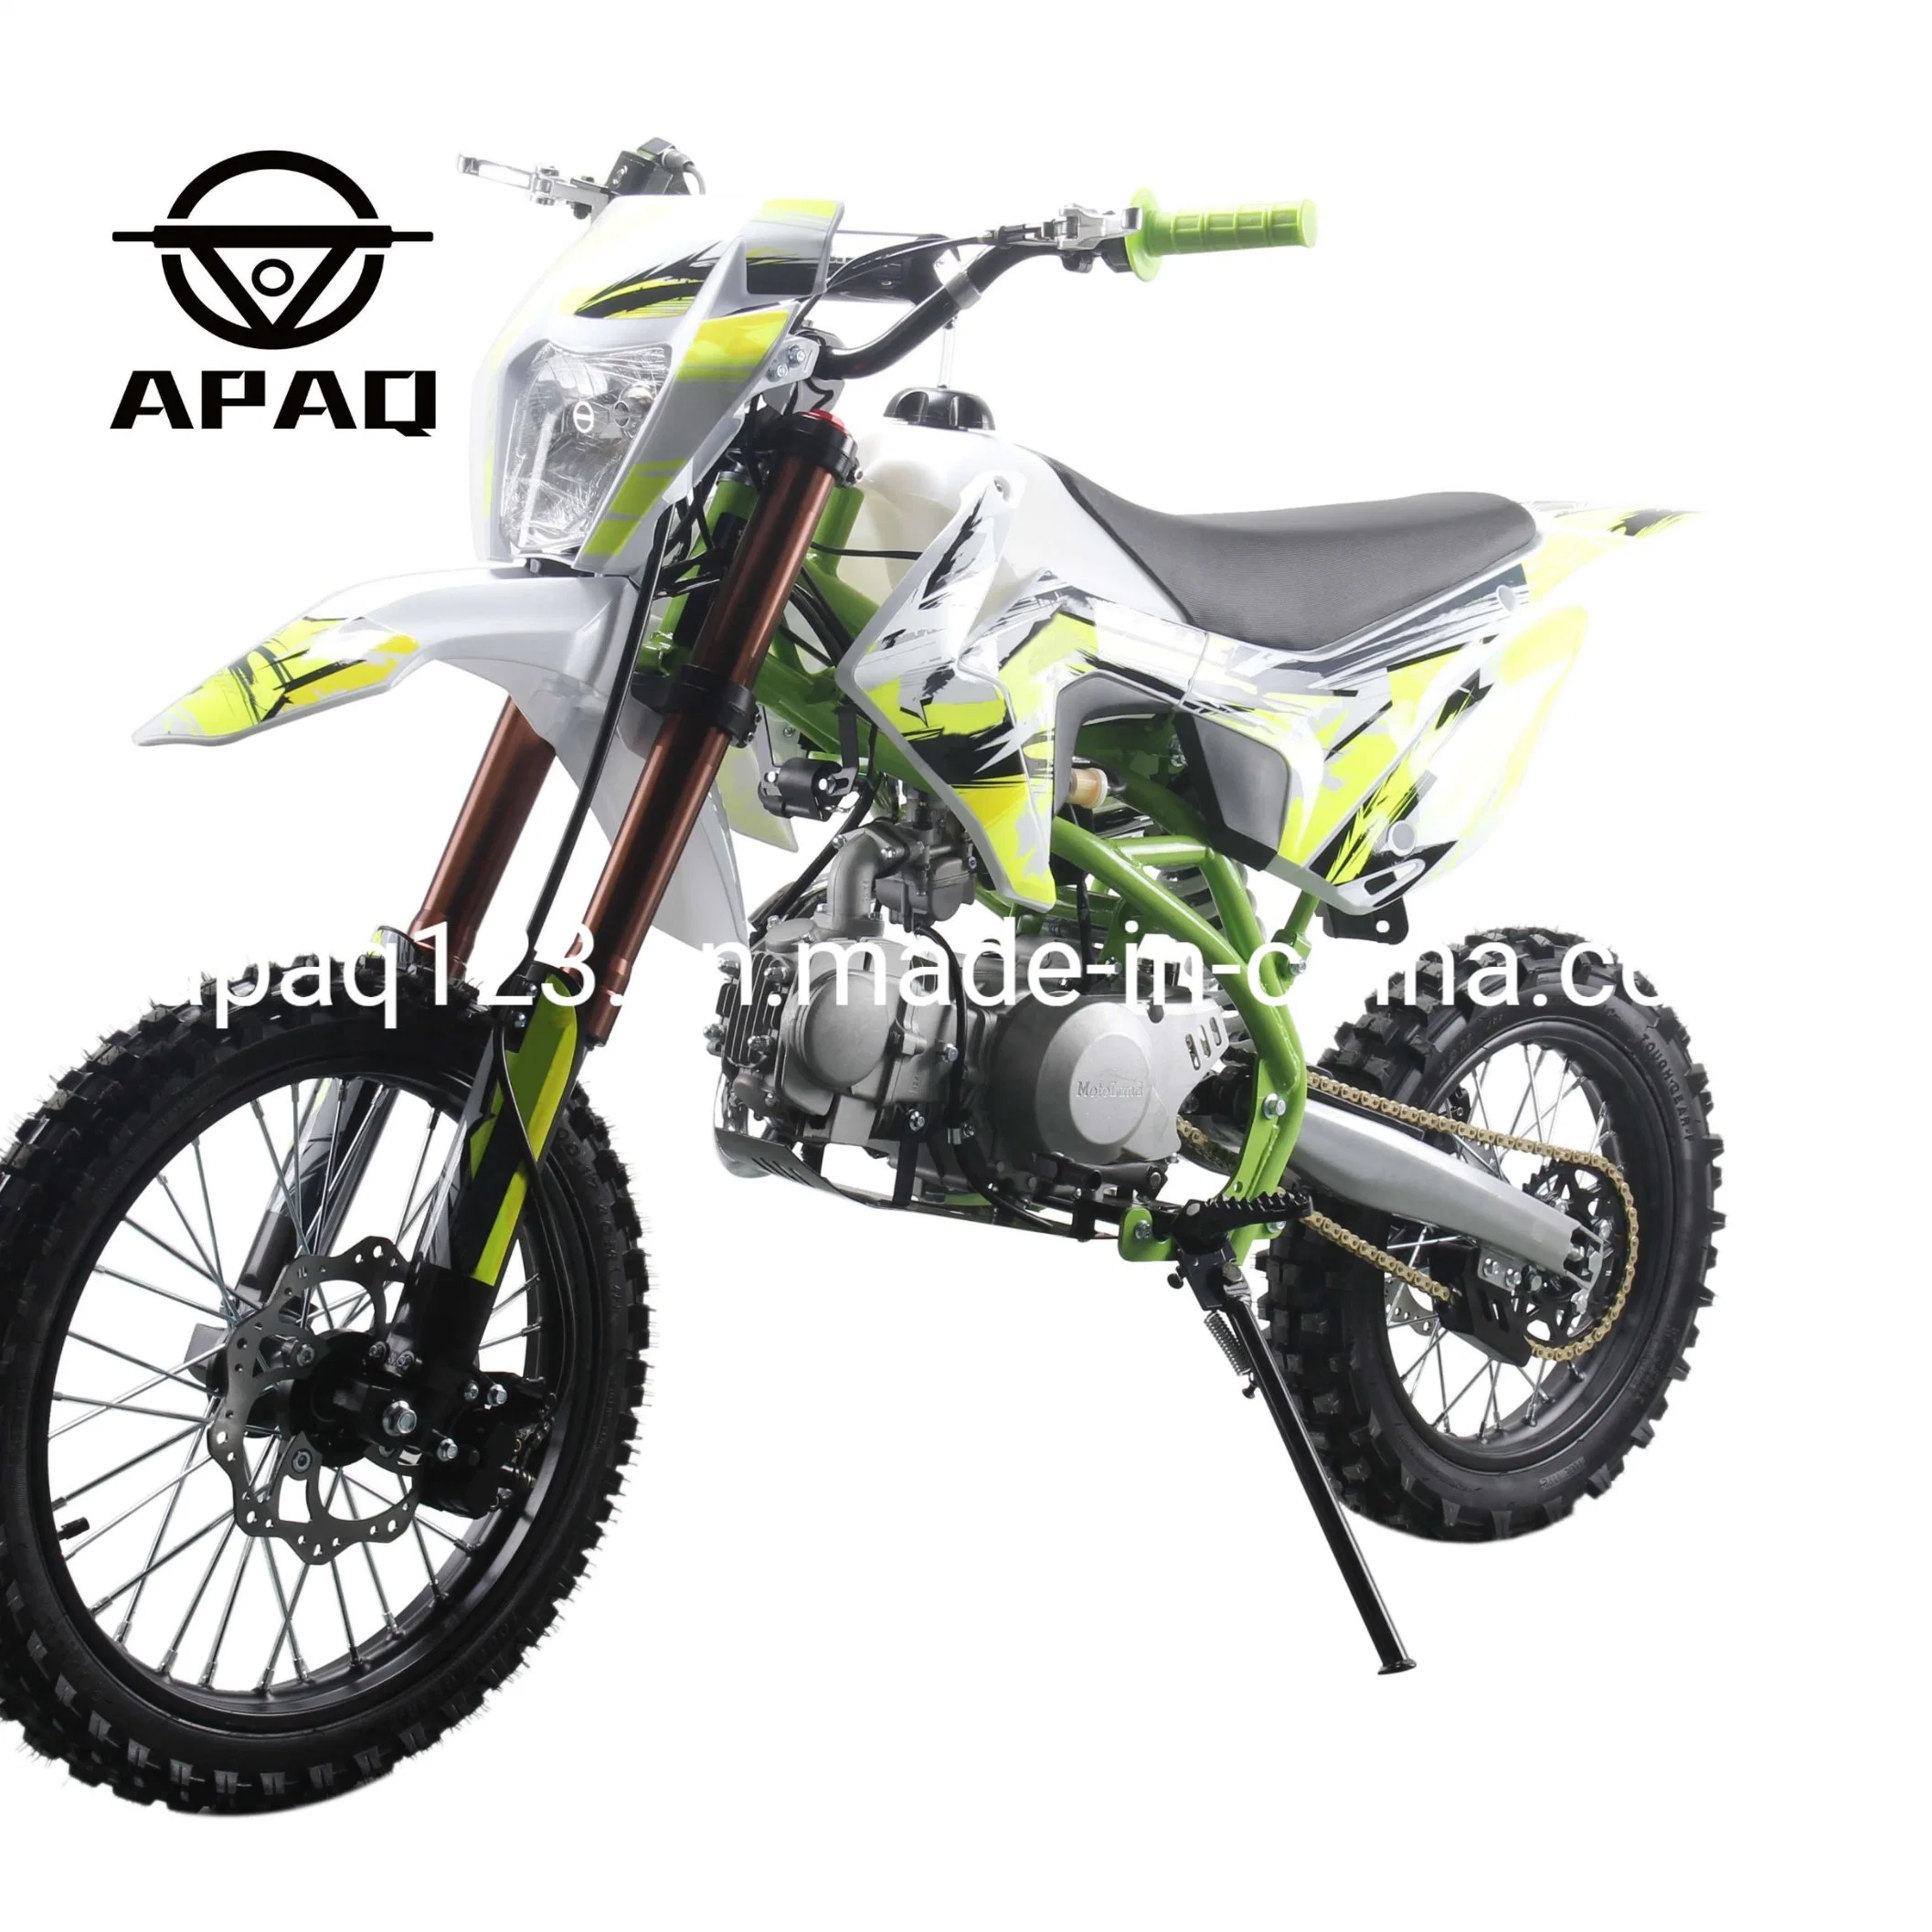 Apaq off-Road 125 Cc Dirt Bike 125cc Dirt Bikes with CE EEC